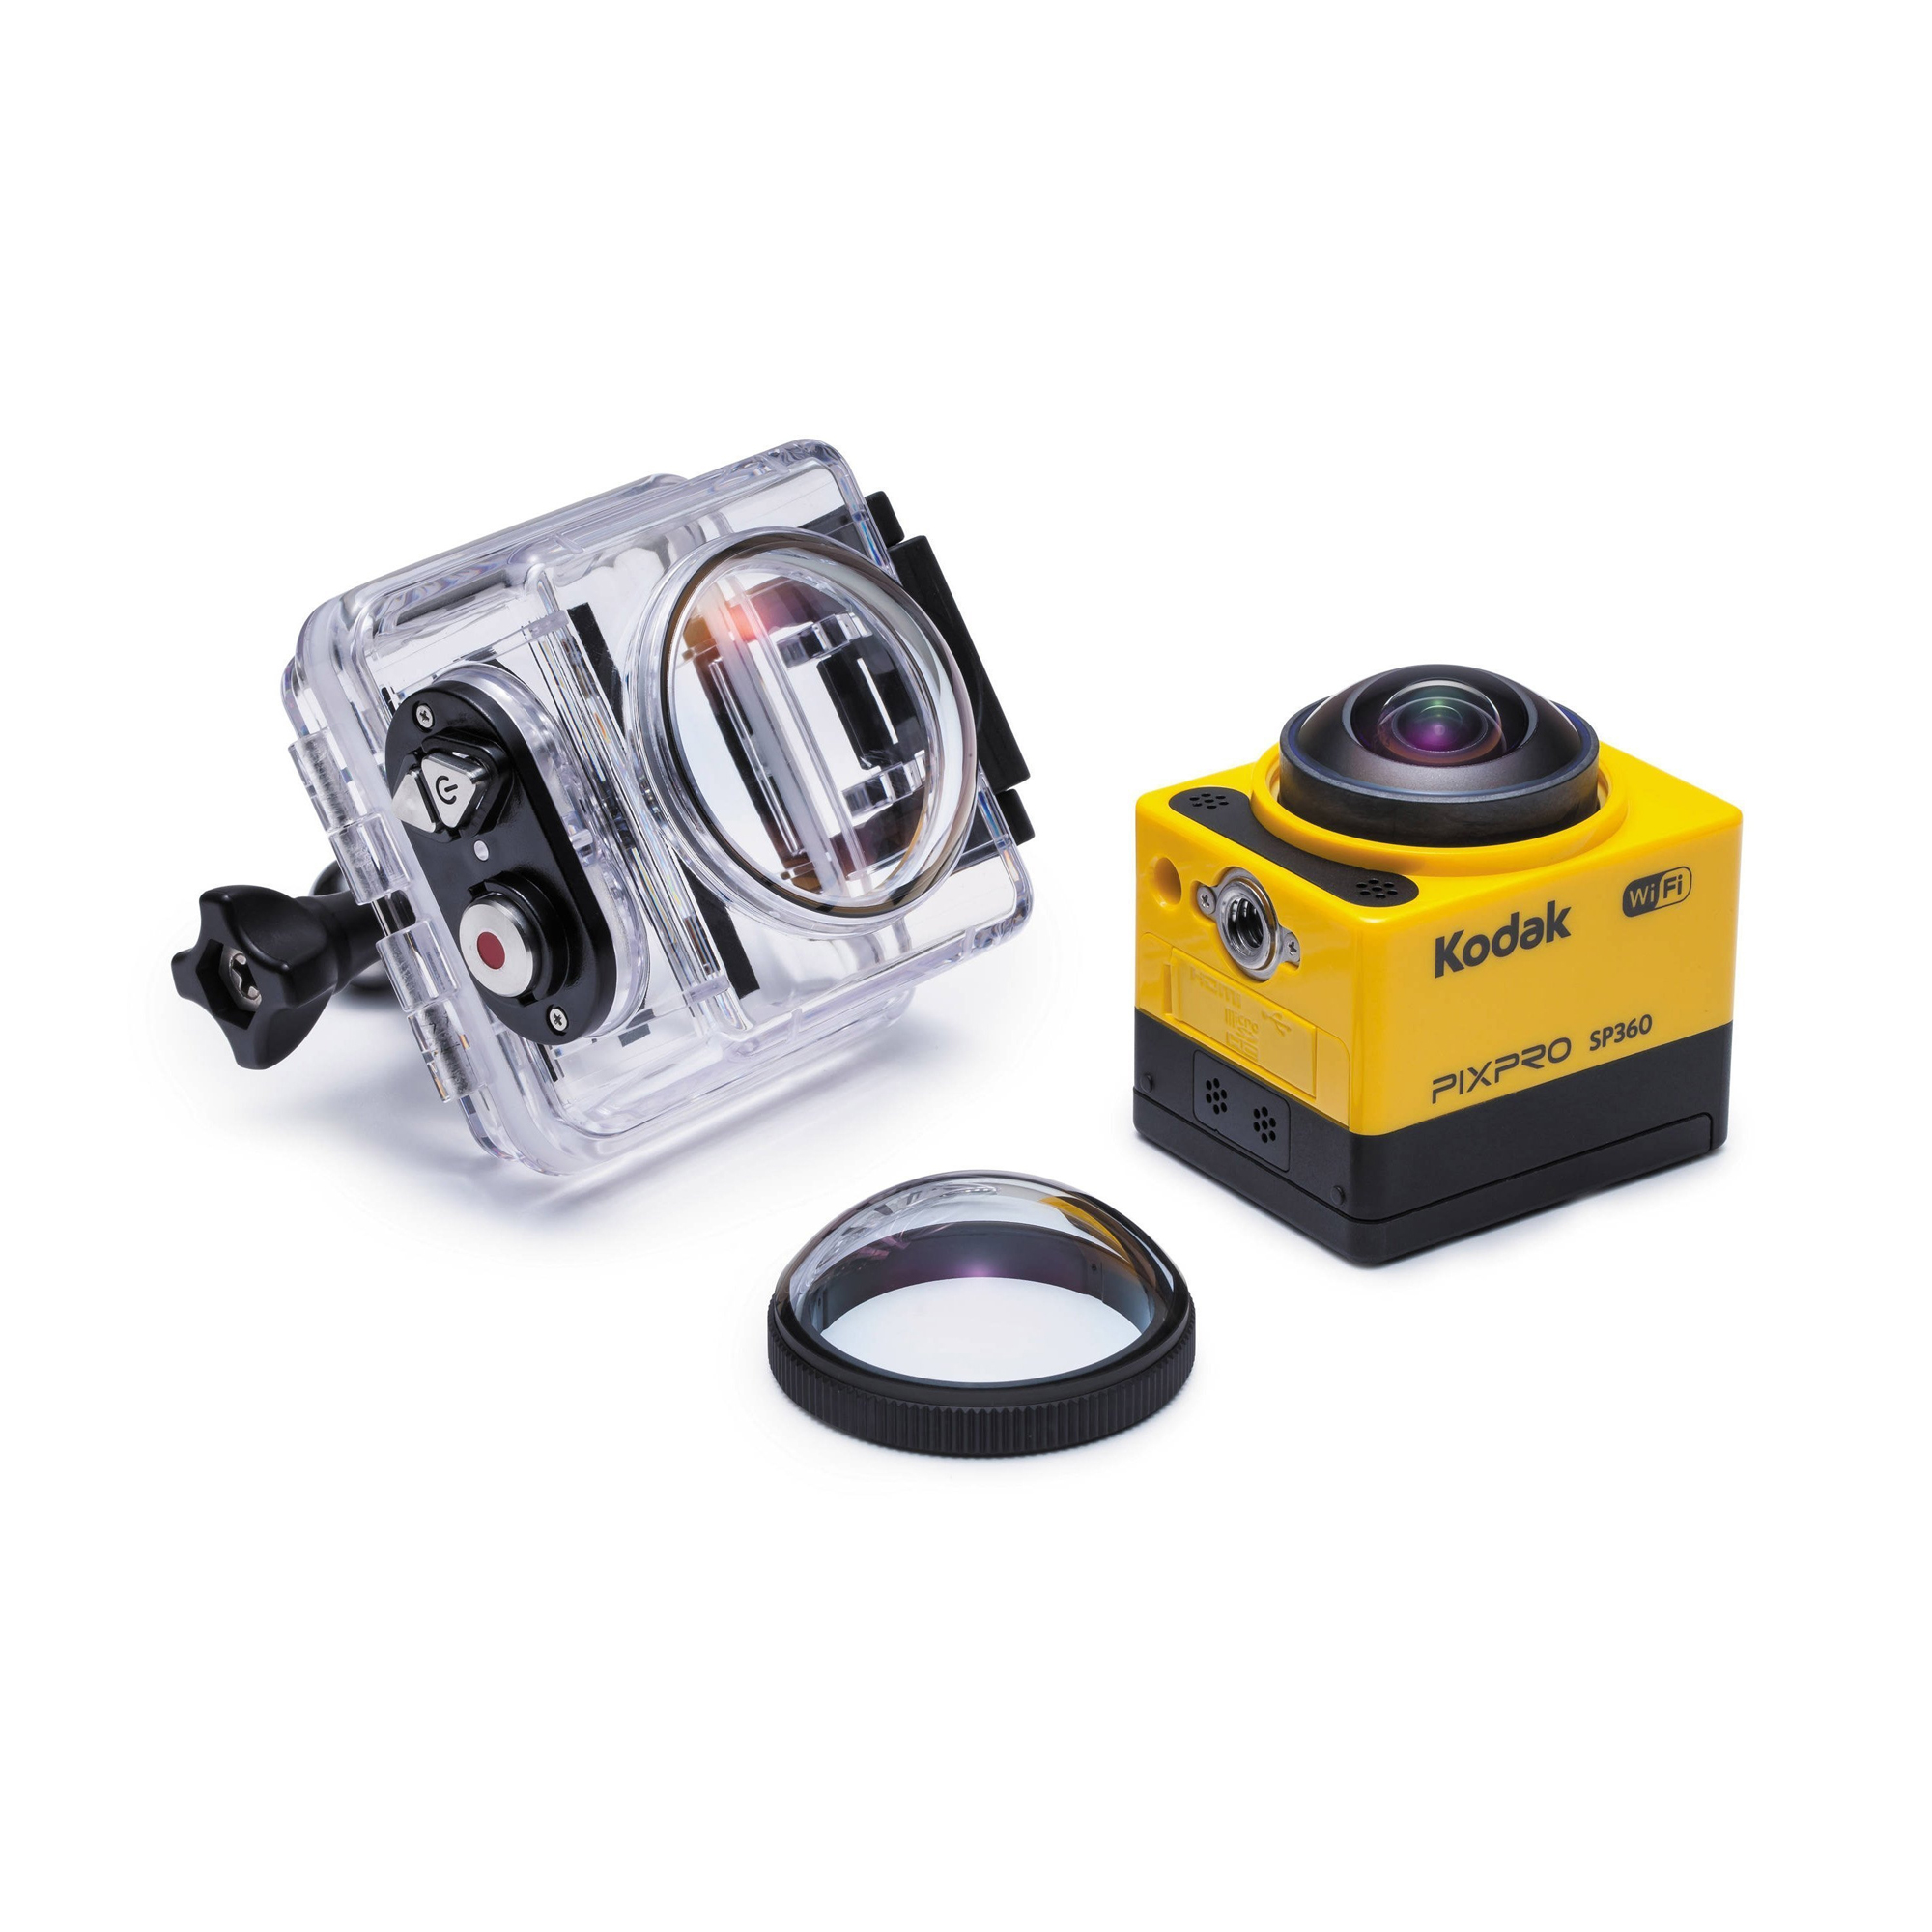 Kamera Kodak SP360 Extream Kit